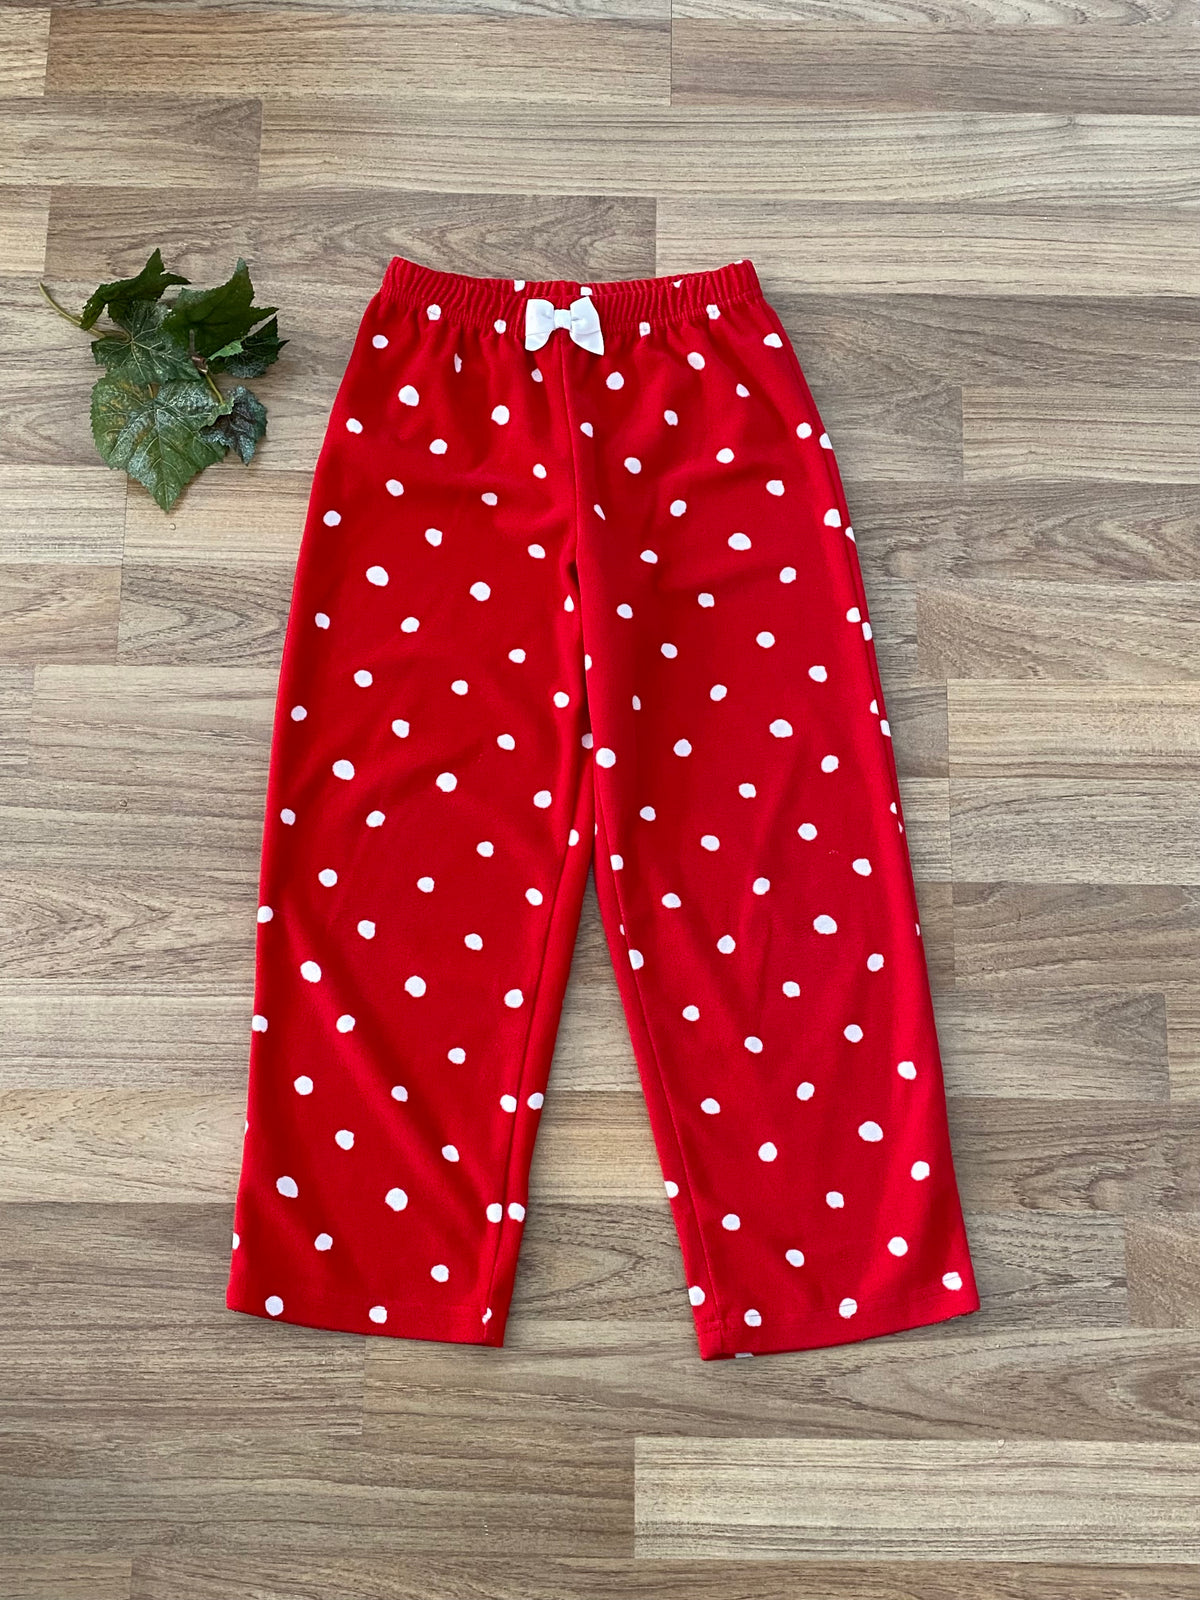 Pajama Pants (Girls Size 6)